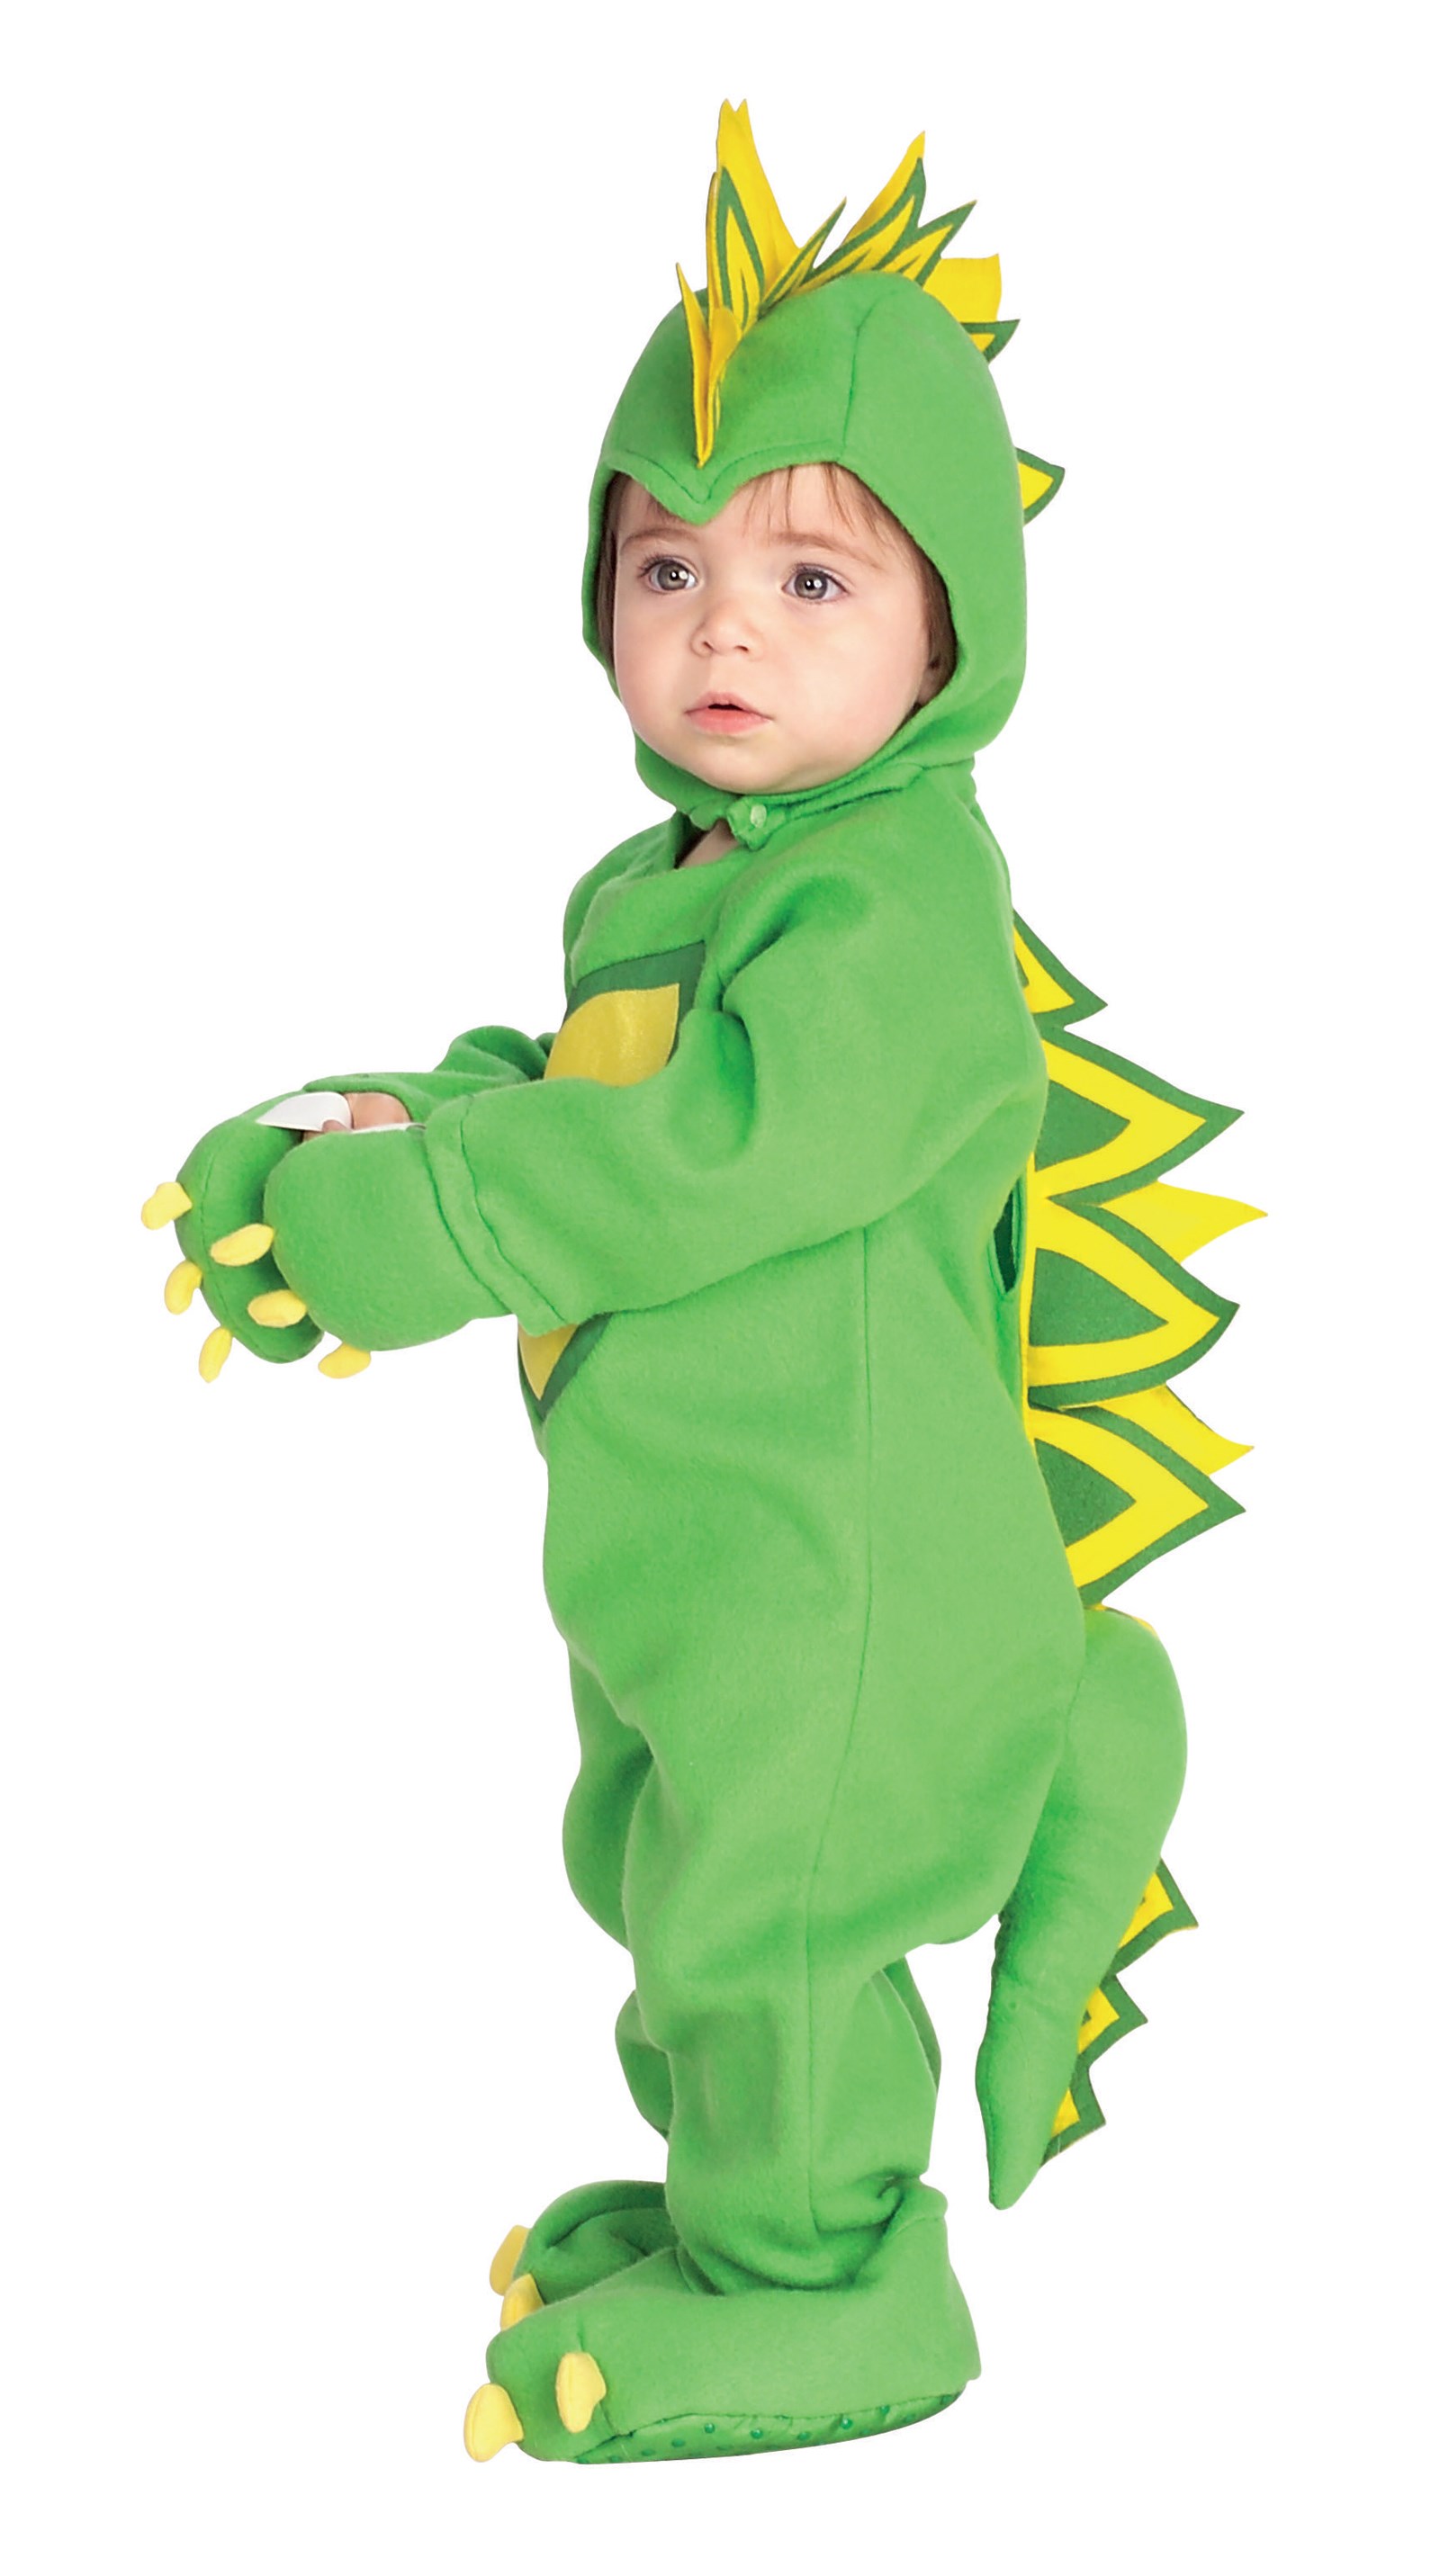 Baby Dragon Infant Costume